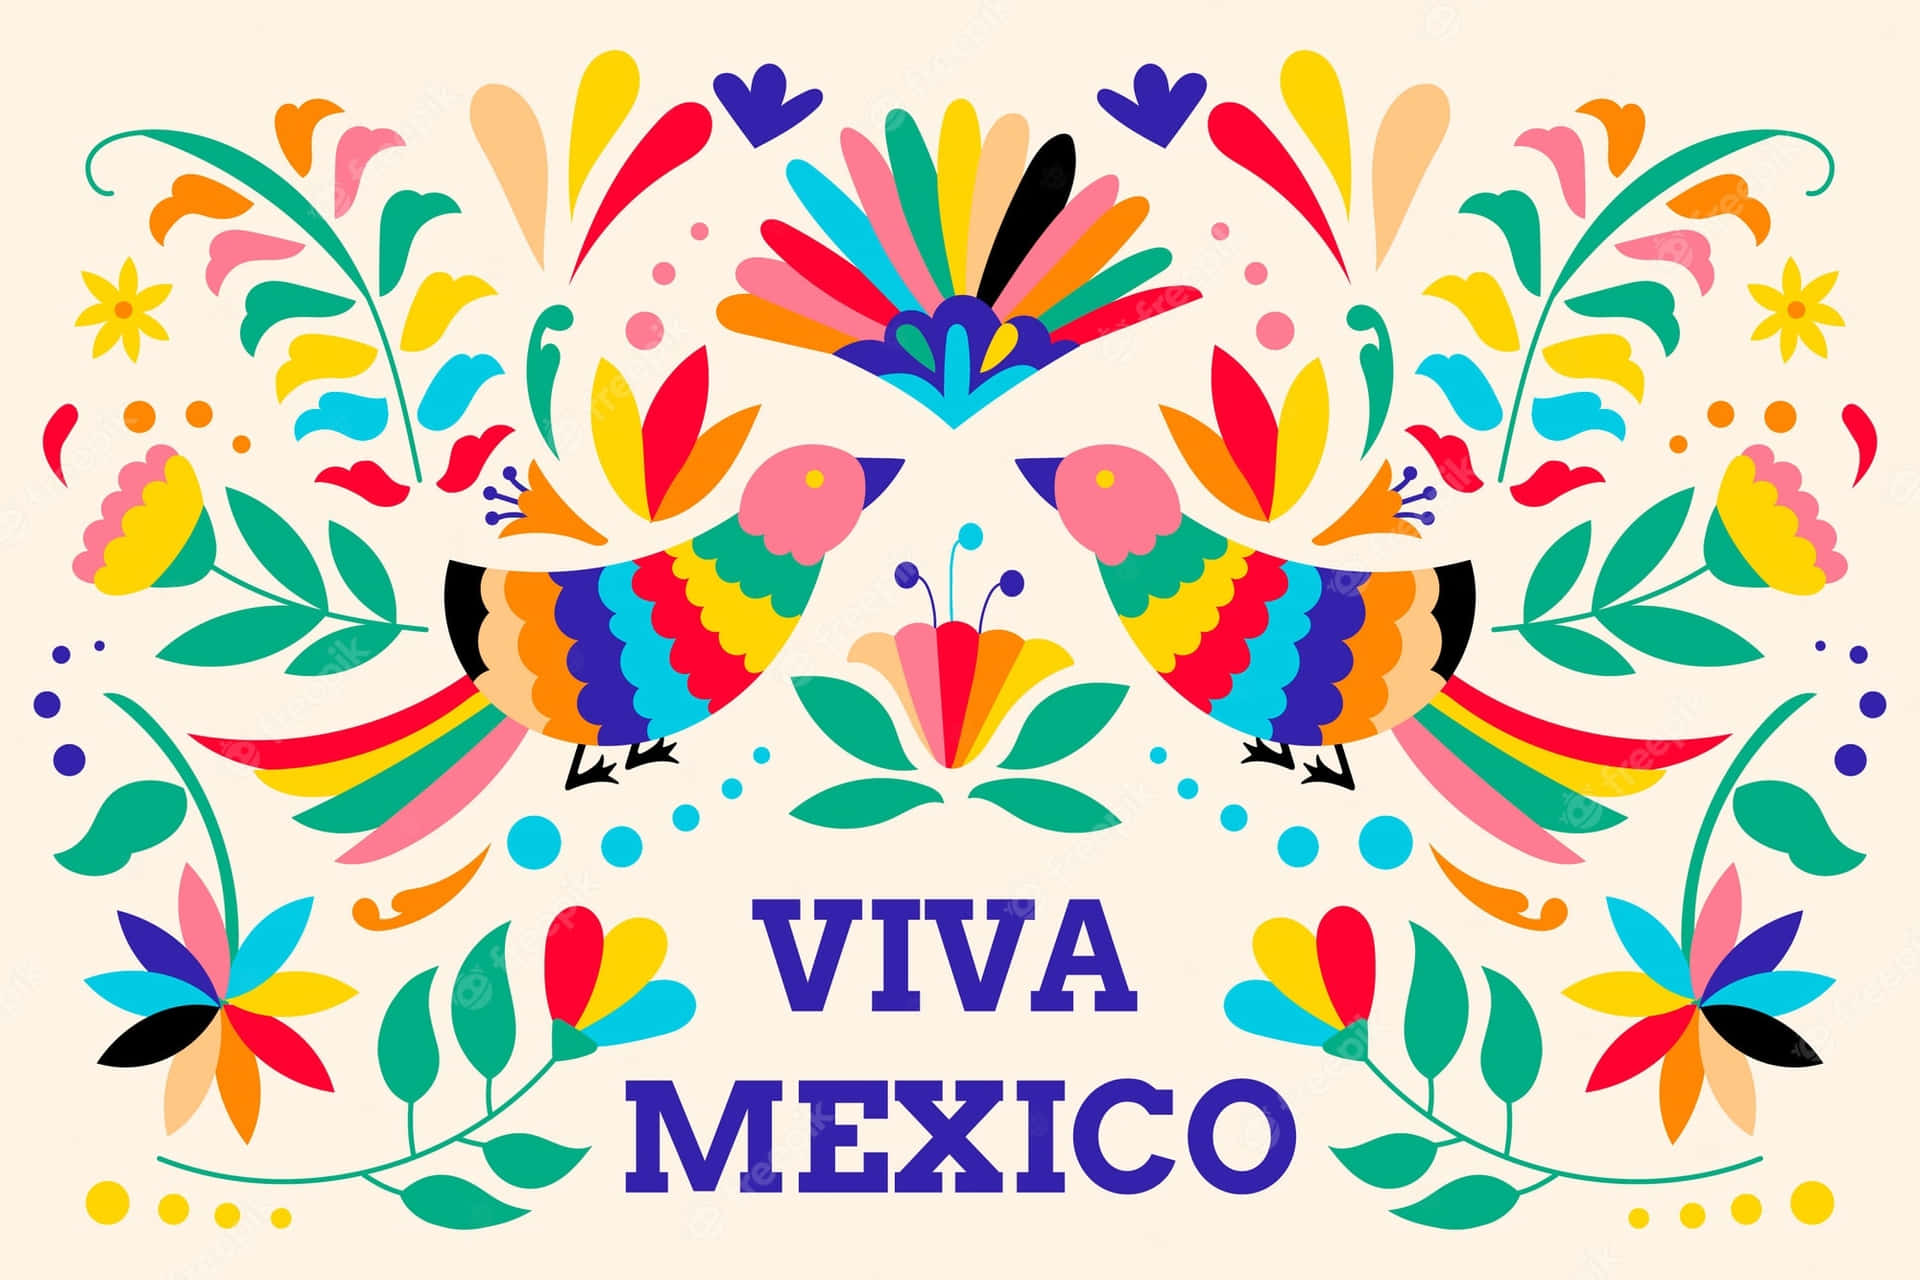 Viva Mexico - Colorful Mexican Art